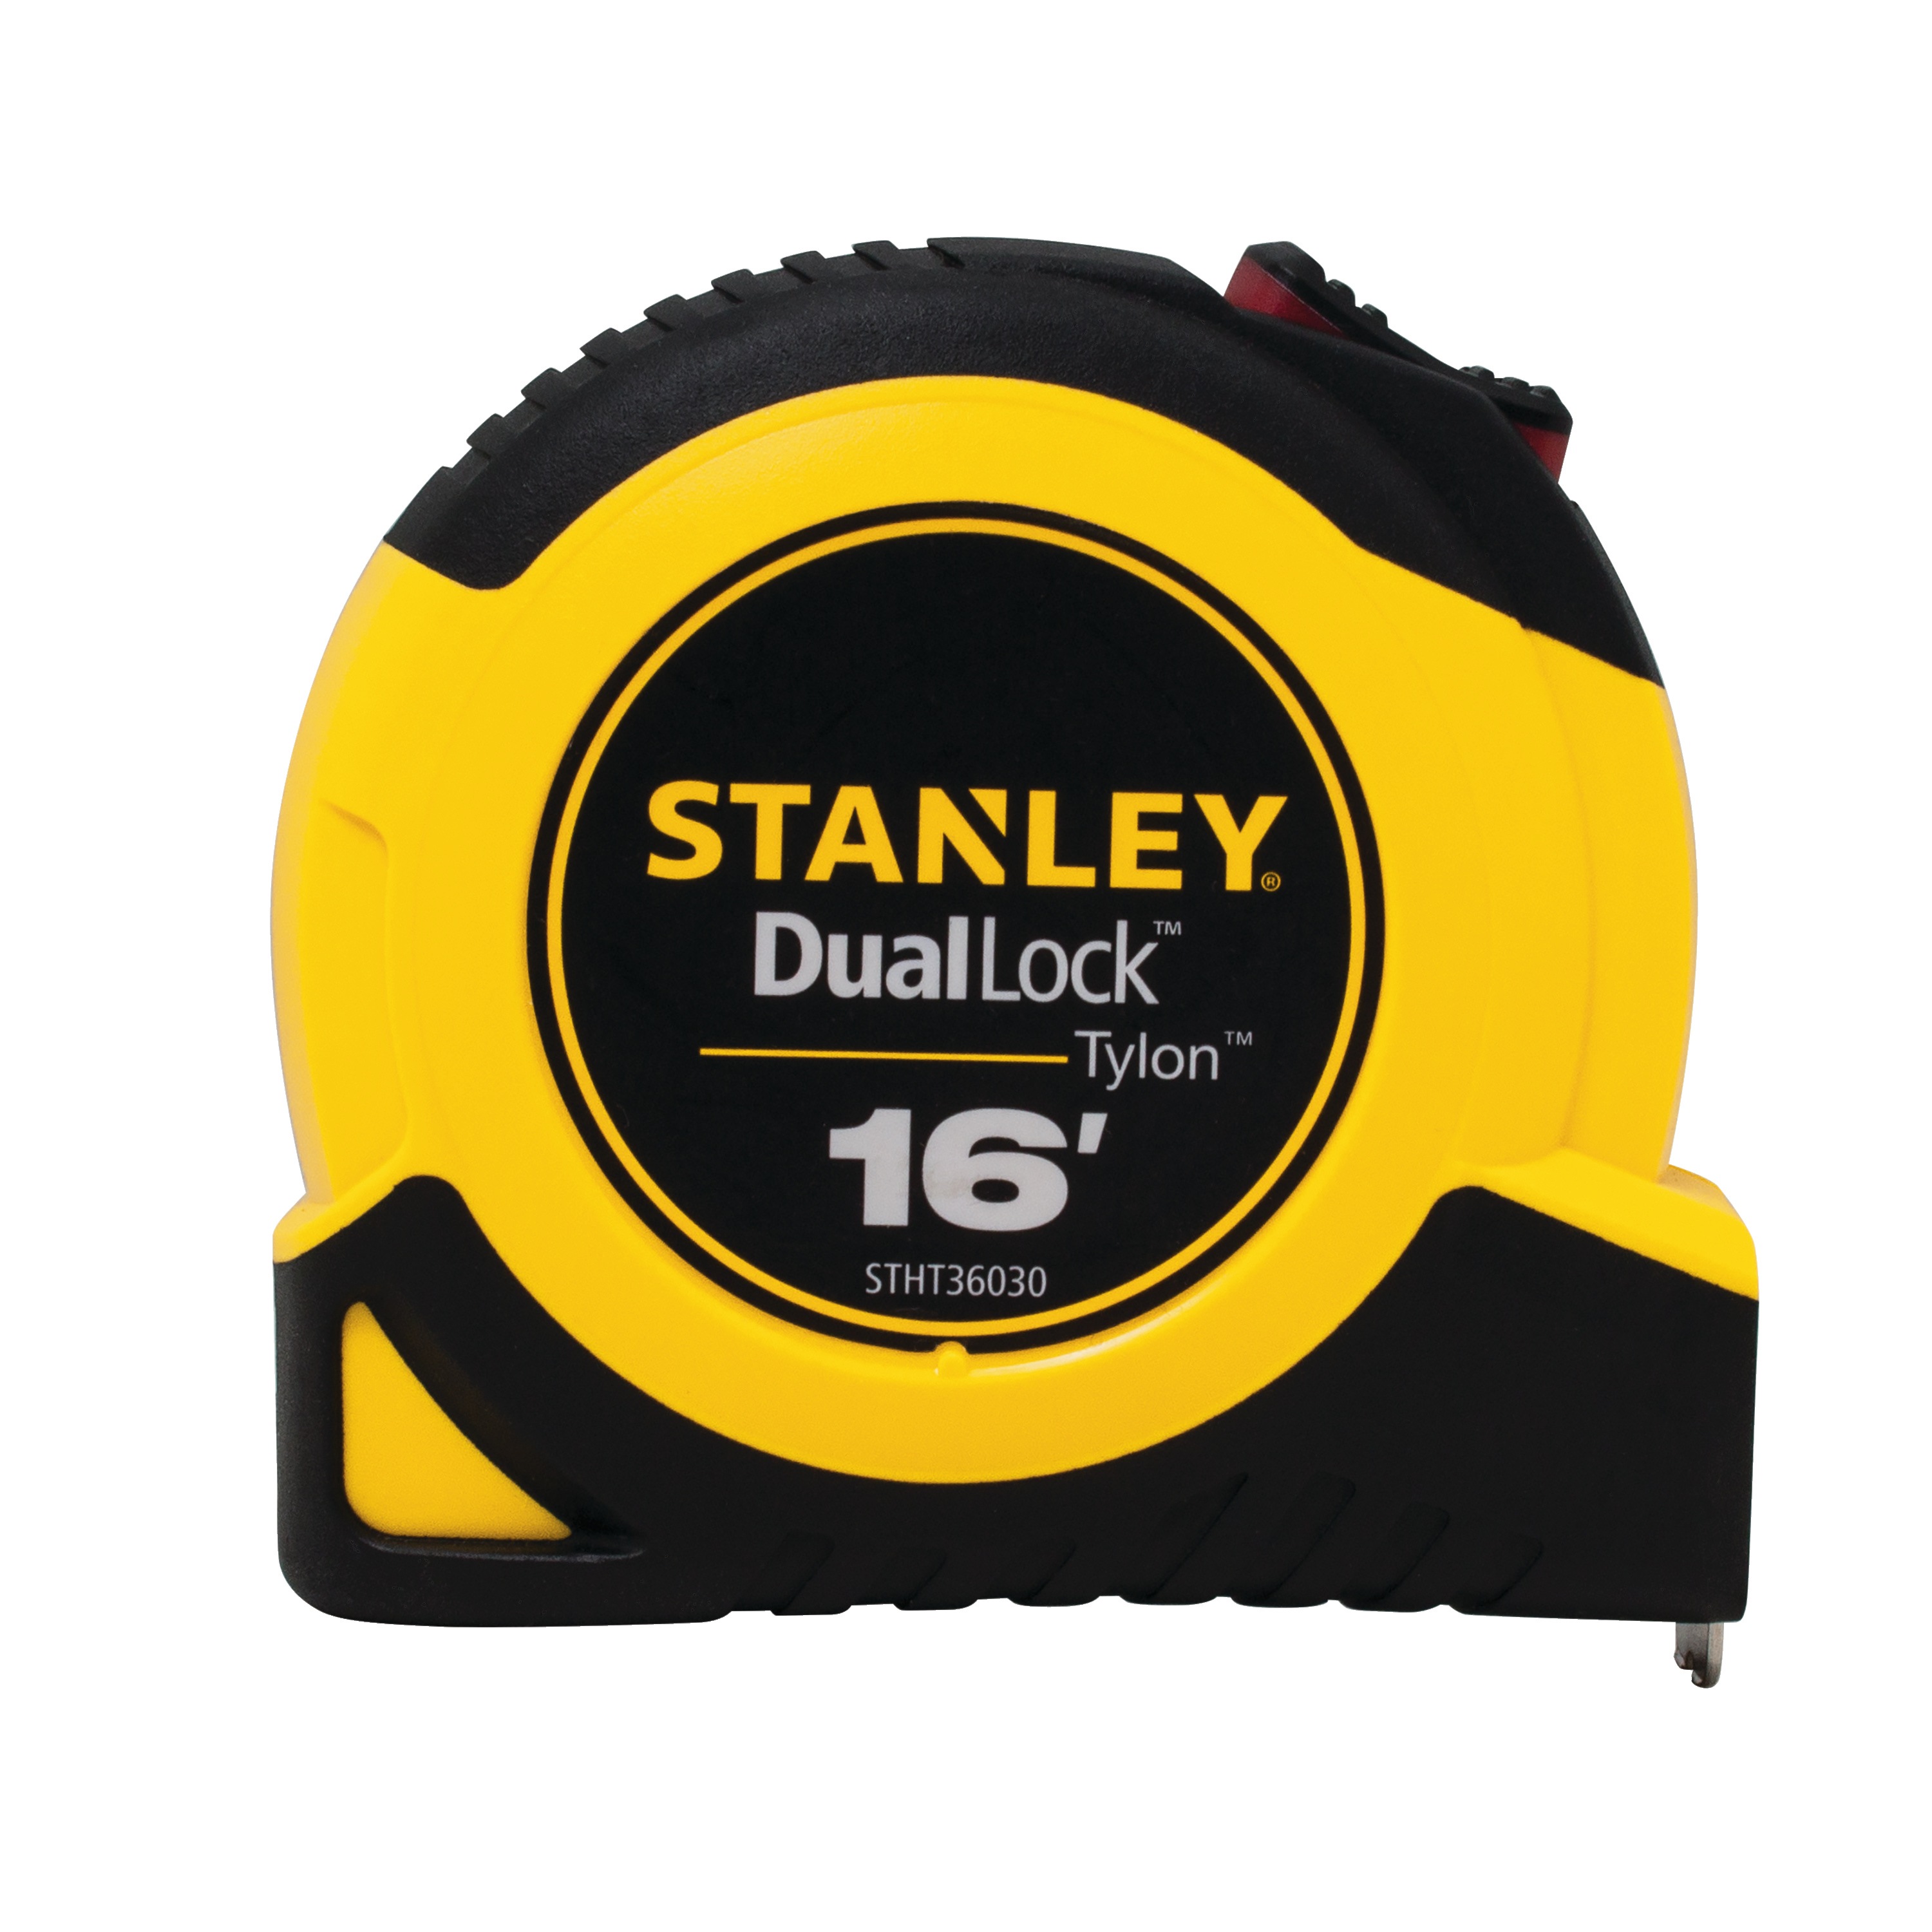 Stanley Tools - 16 ft DualLock Tape Measure - STHT36030